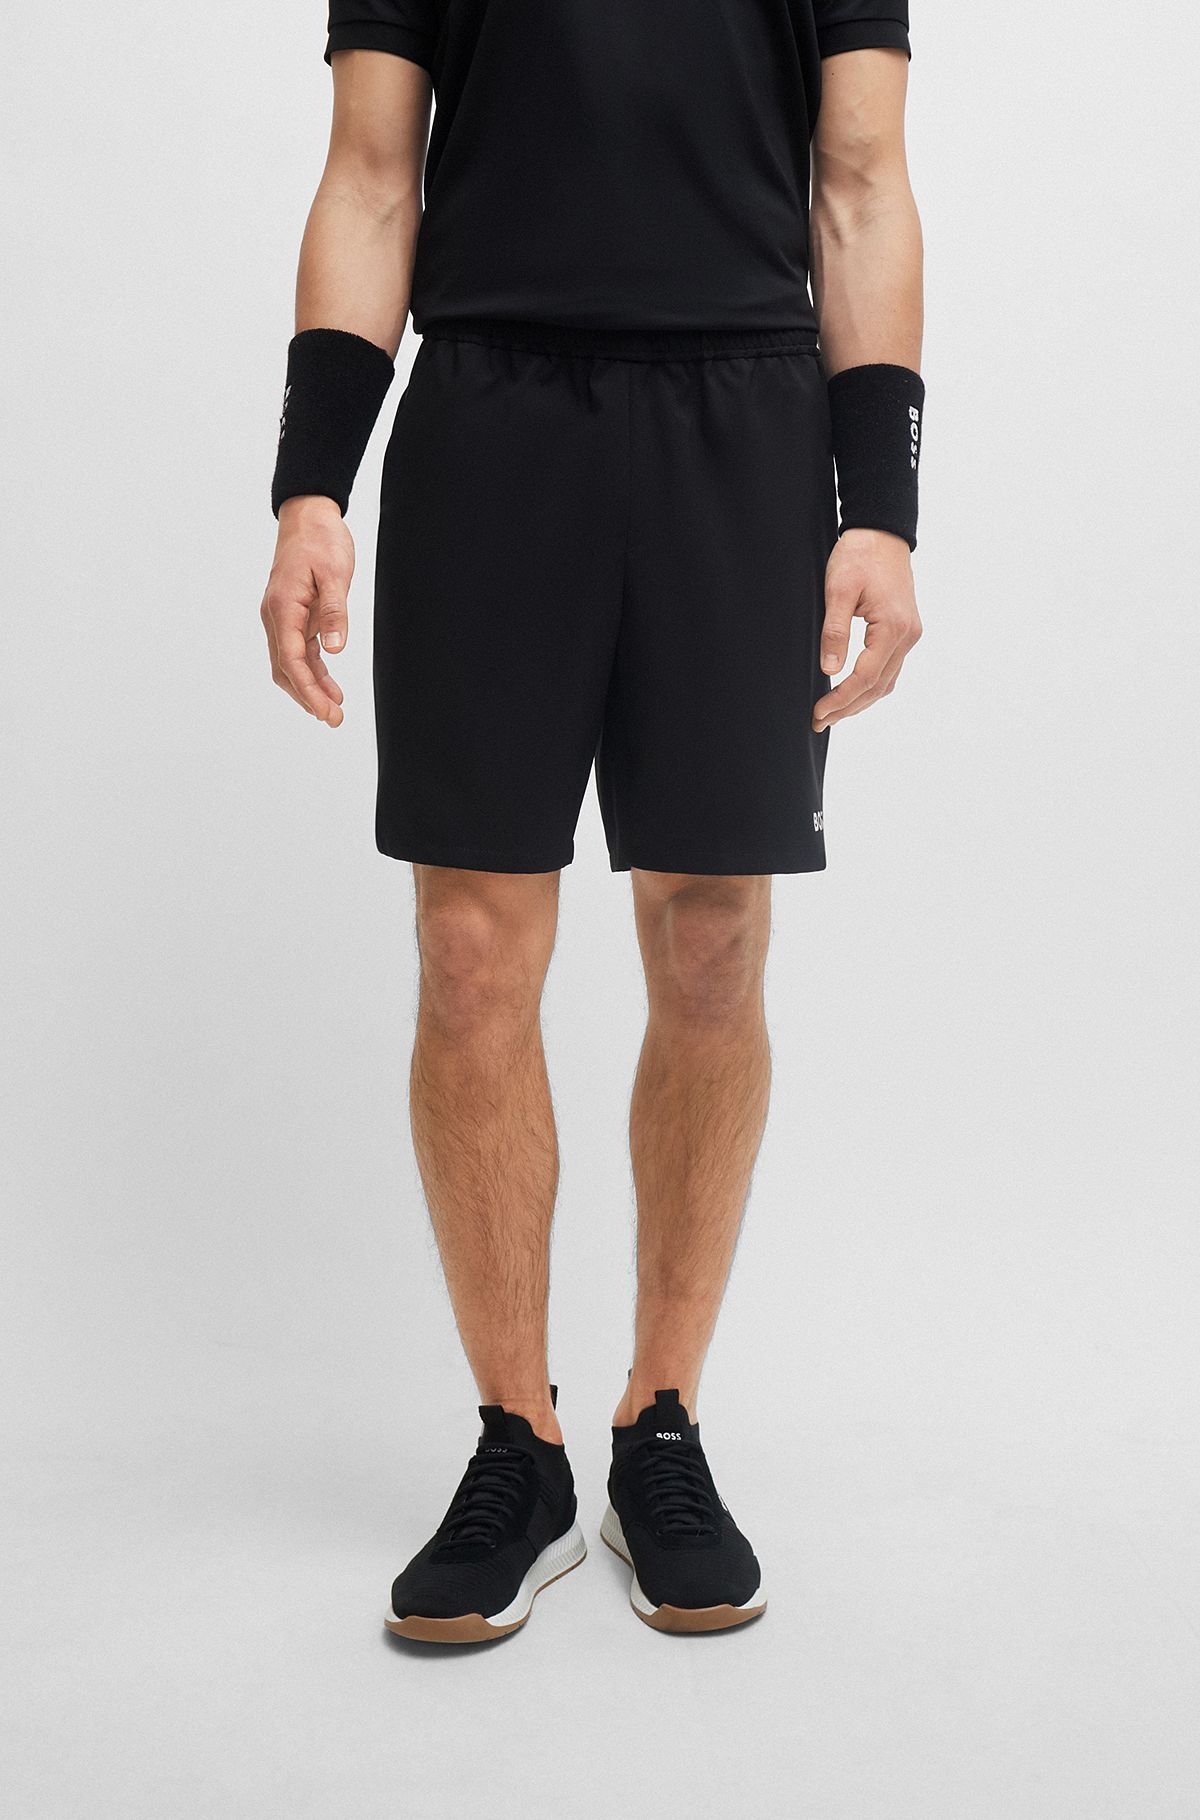 BOSS x Matteo Berrettini water-repellent shorts with logo print, Black